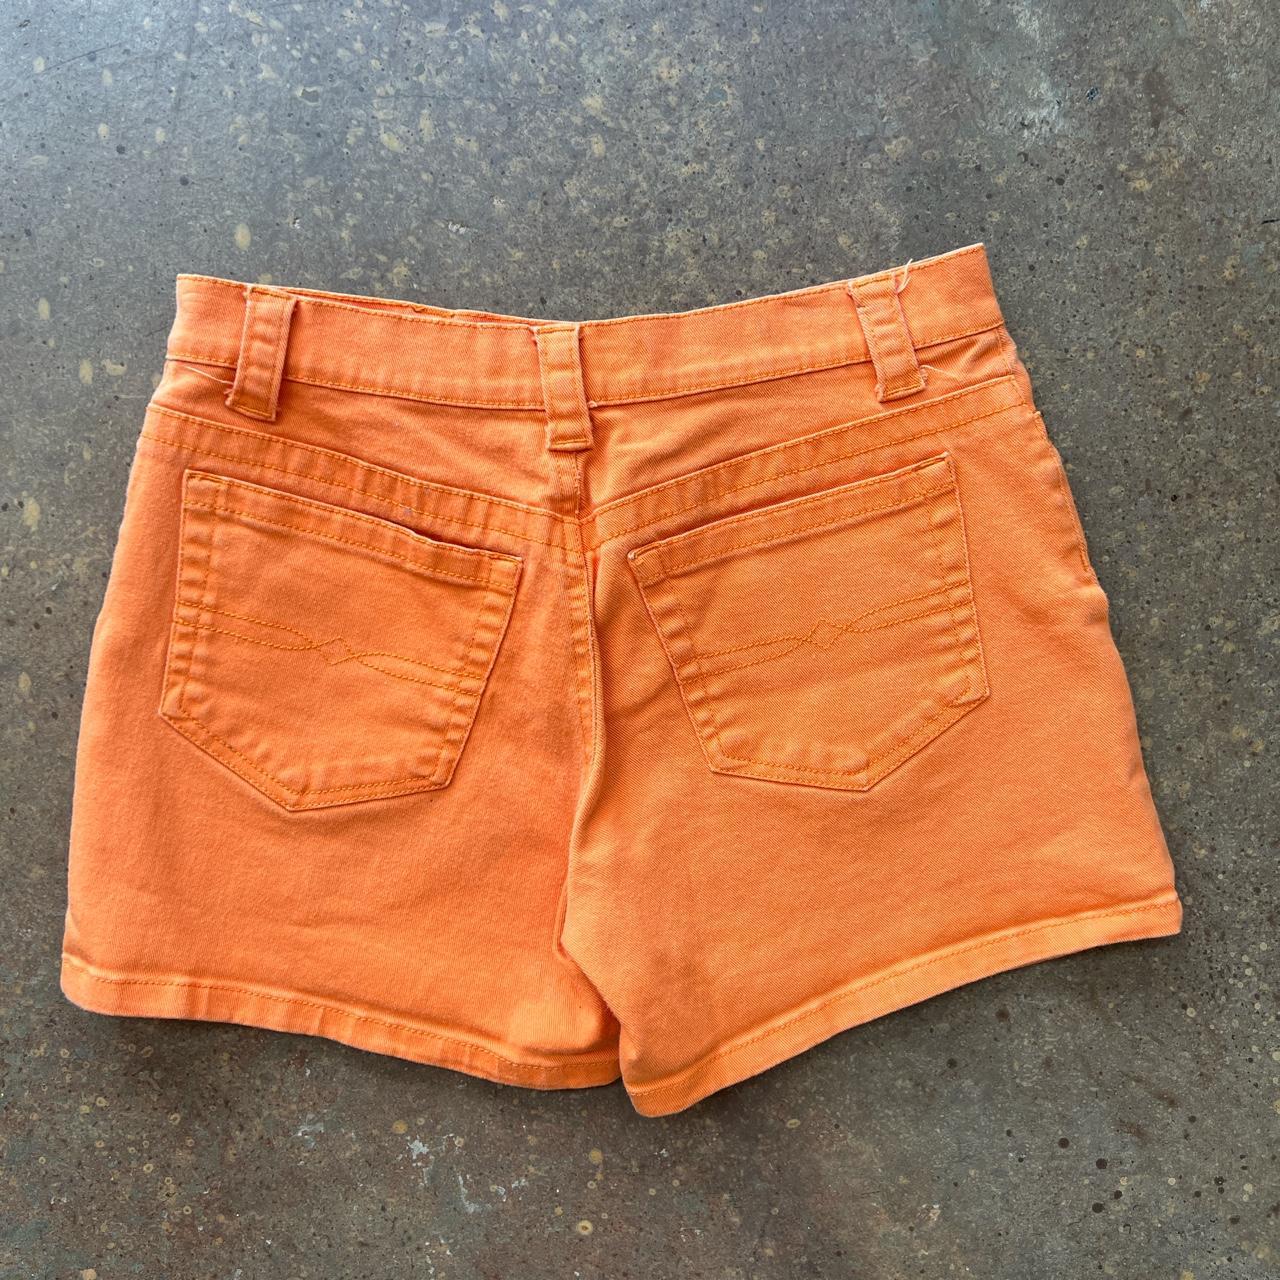 Vintage Y2K early 2000s era orange shorts! Mid... - Depop